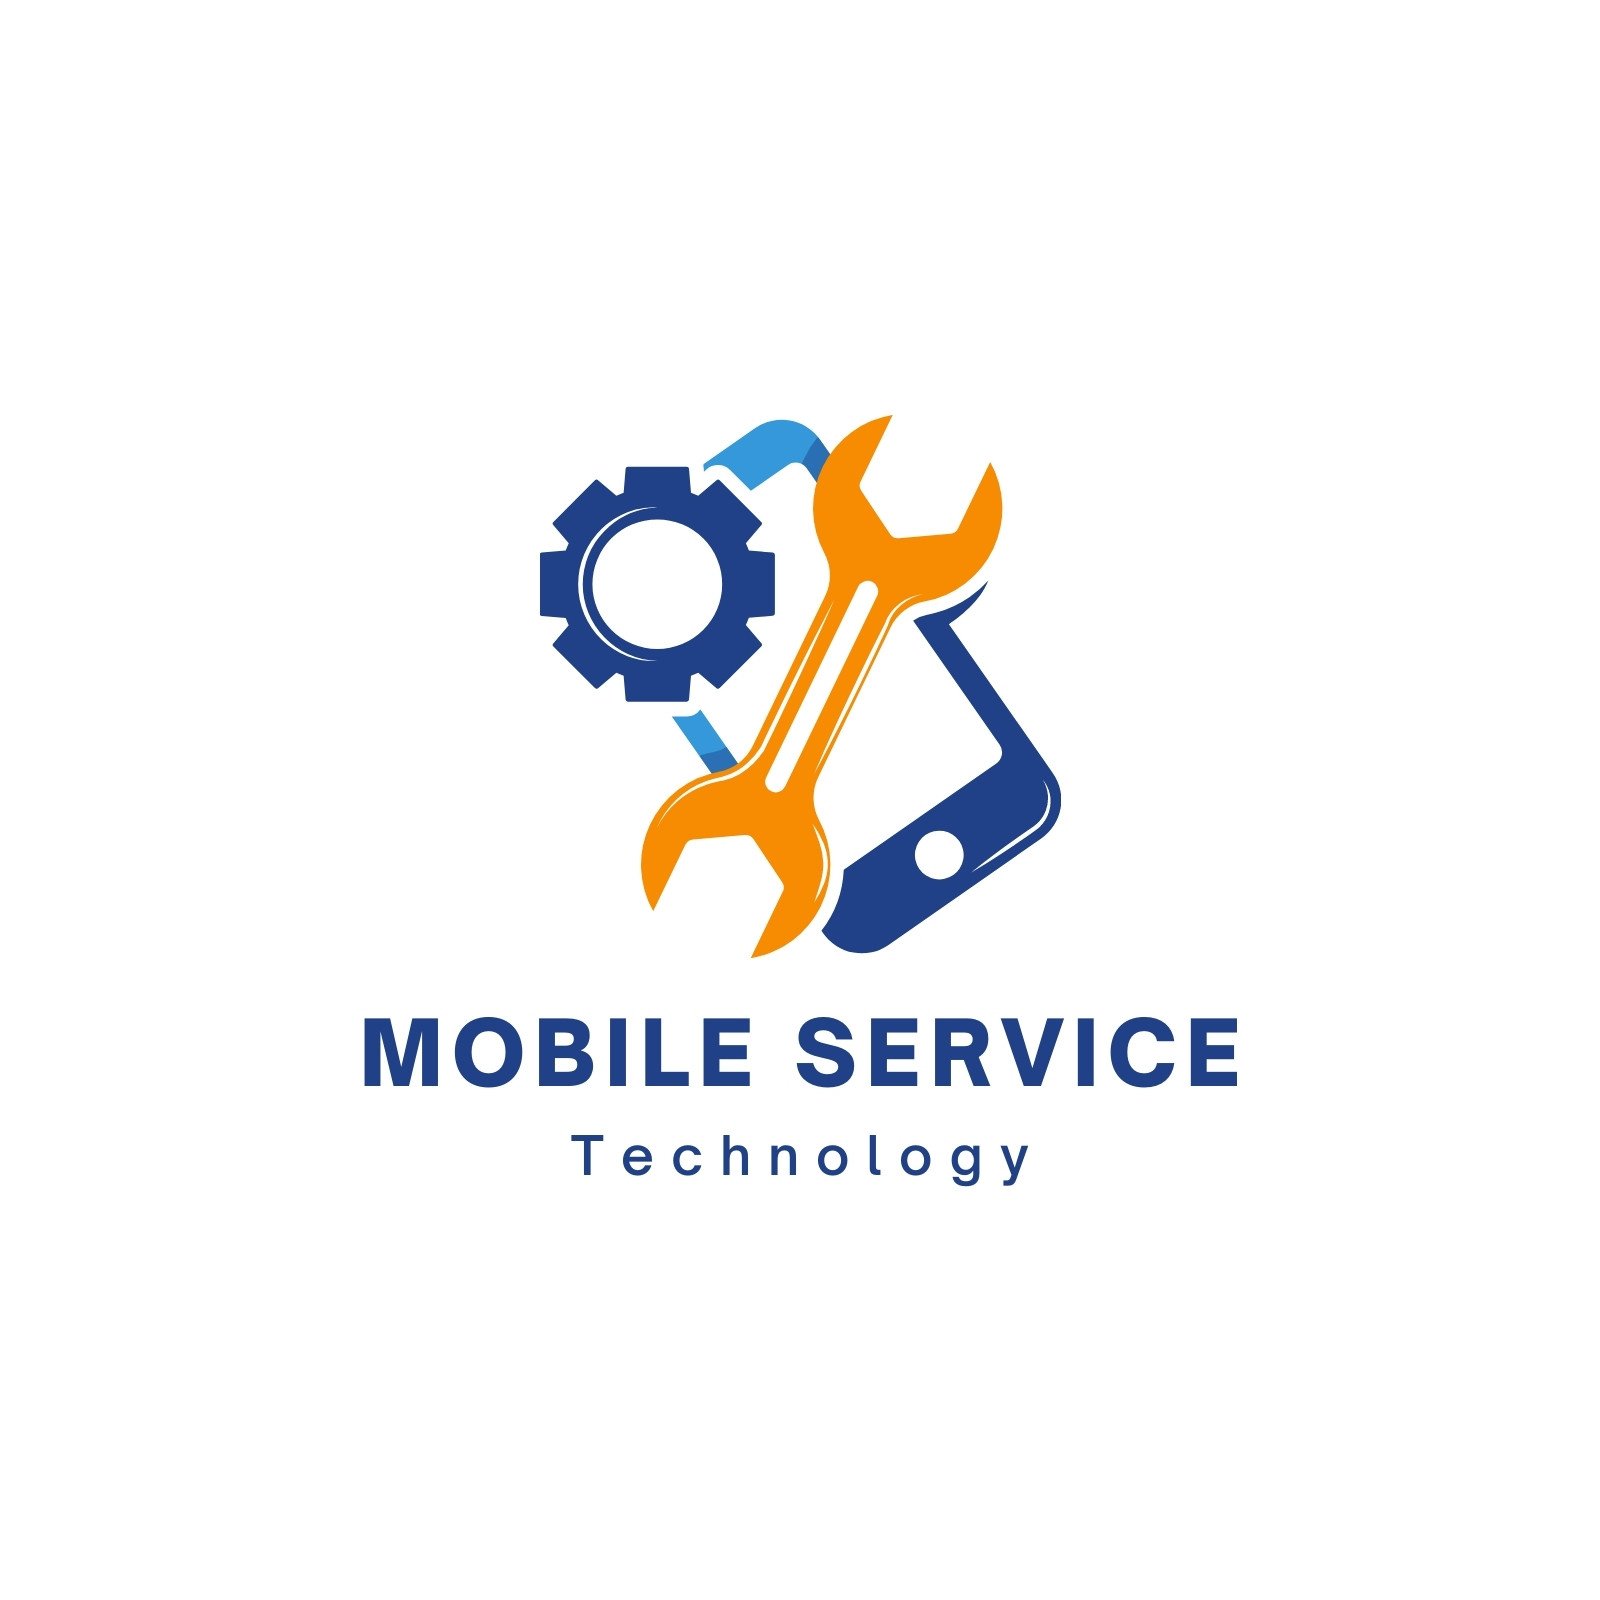 Modern, Professional, Technical Service Logo Design for FIX&GO by sonym |  Design #14823574